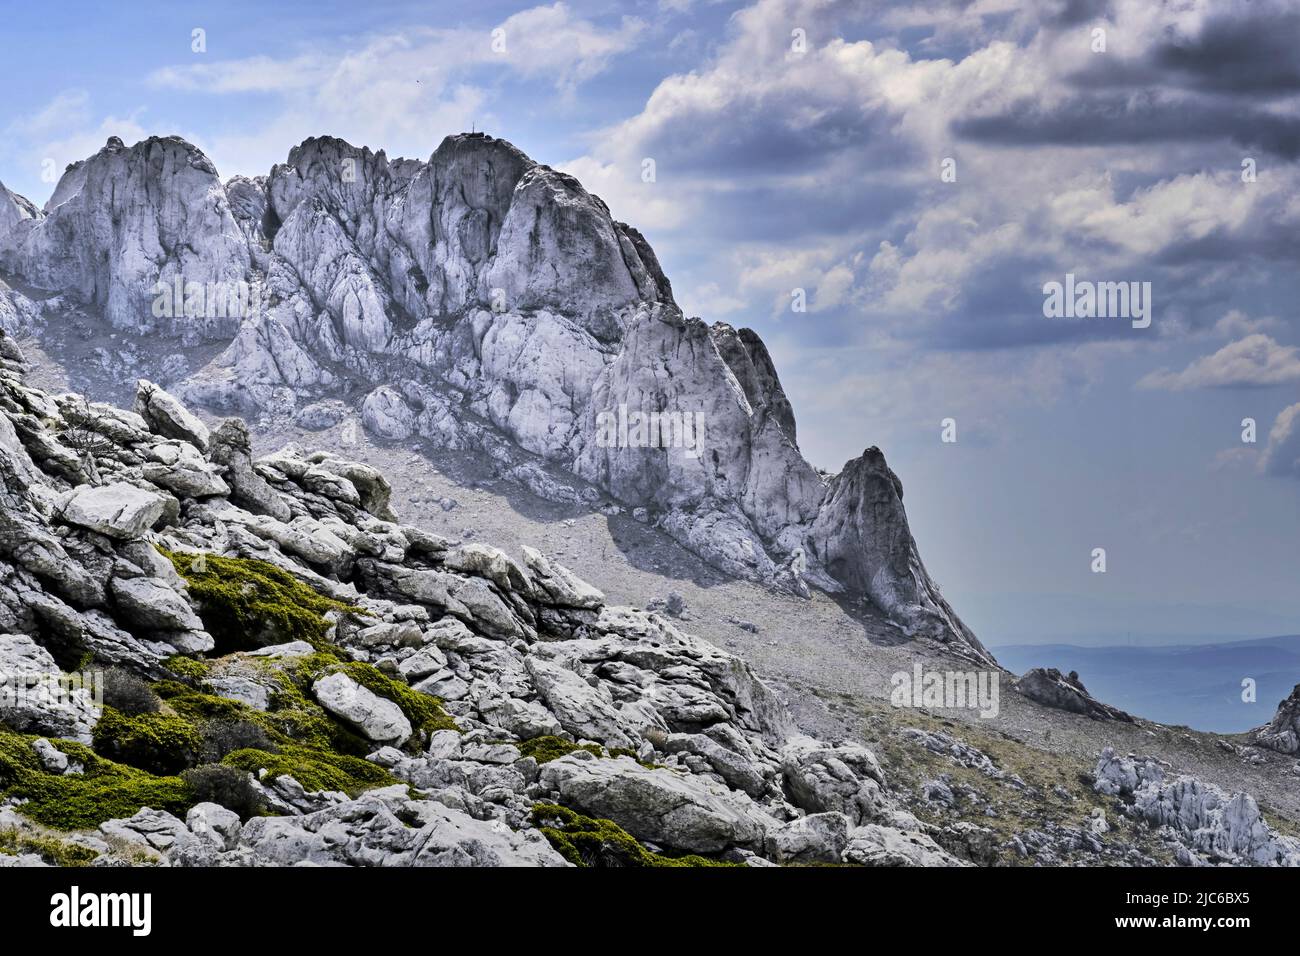 A rugged ridge of light limestone against a cloudy sky in the Velebit Mountains, Croatia Stock Photo